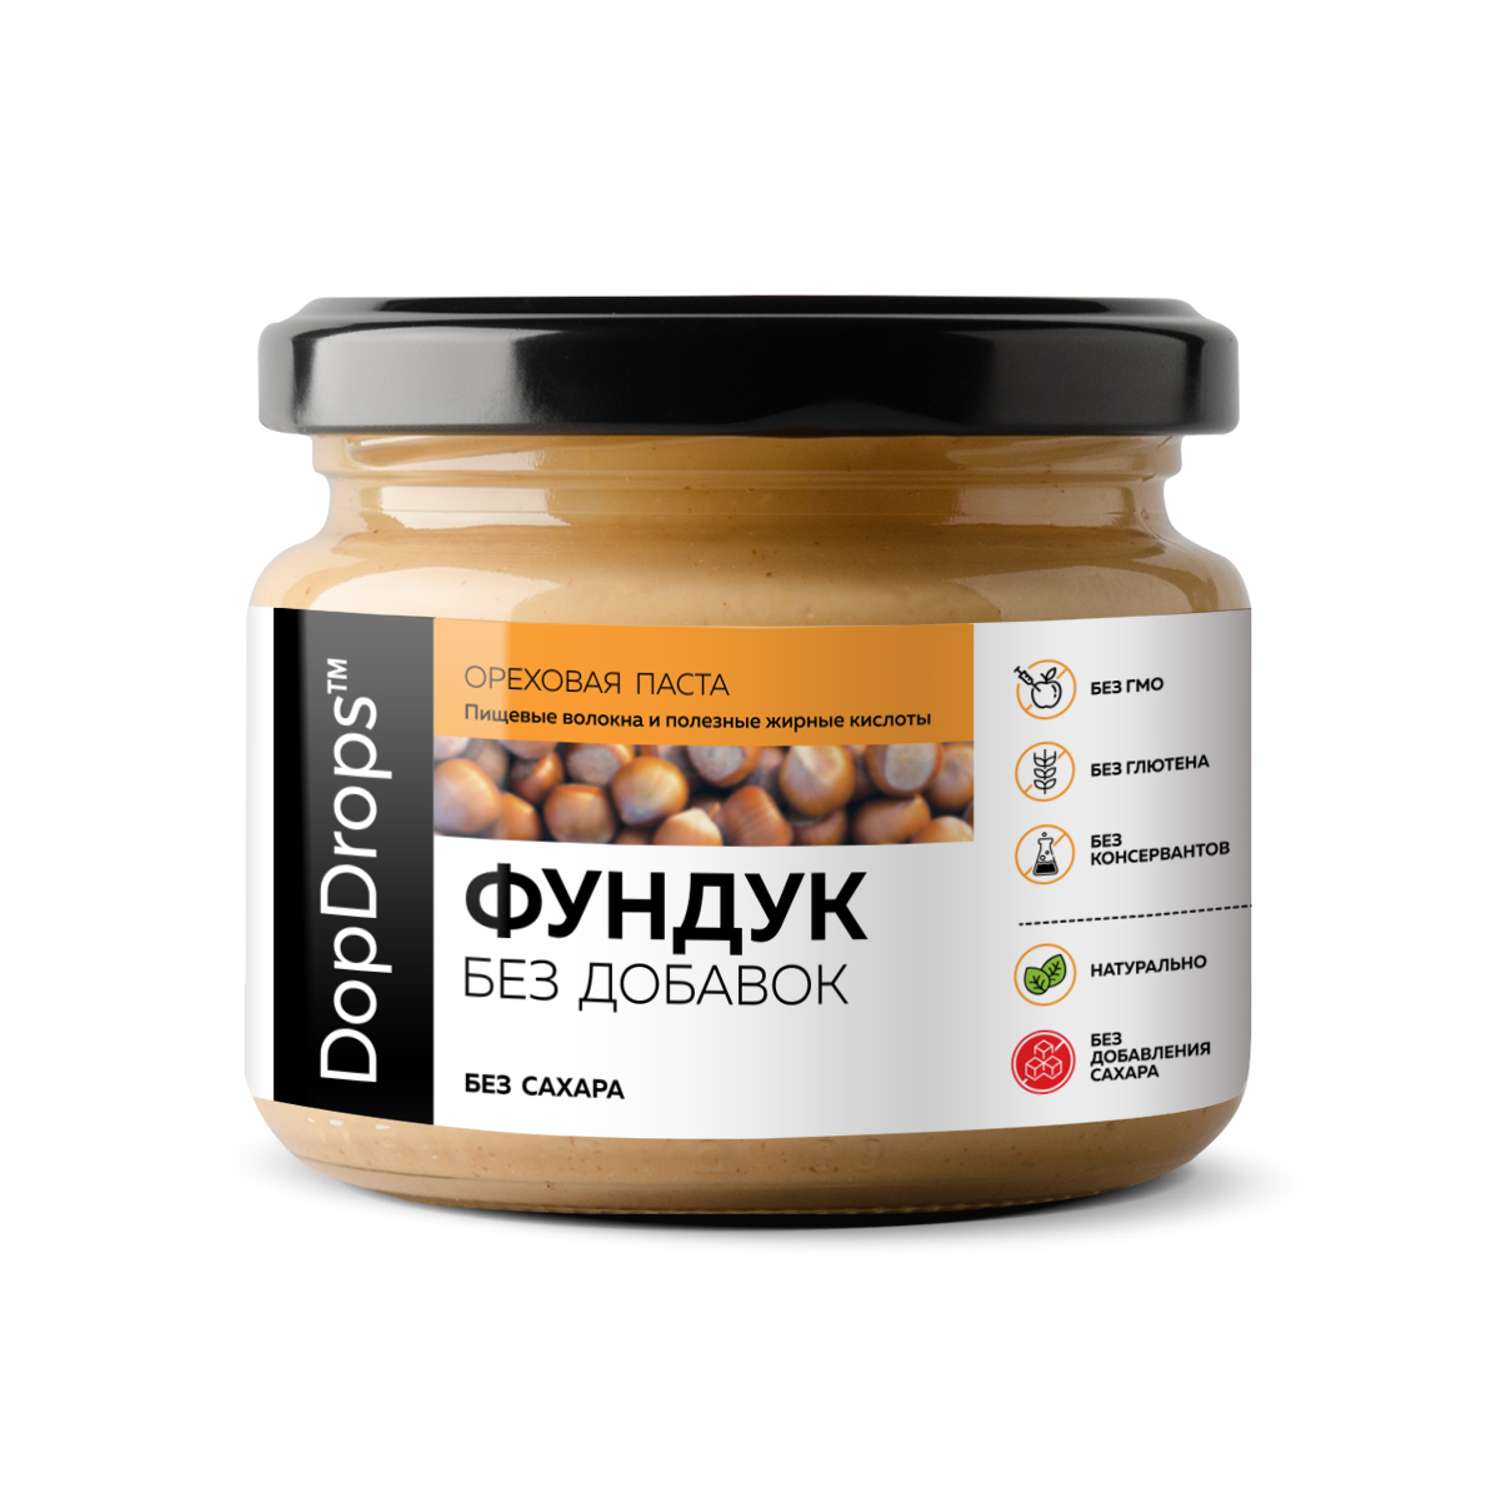 Паста ореховая DopDrops фундучная натуральная без добавок кето без сахара без глютена 250 г - фото 2